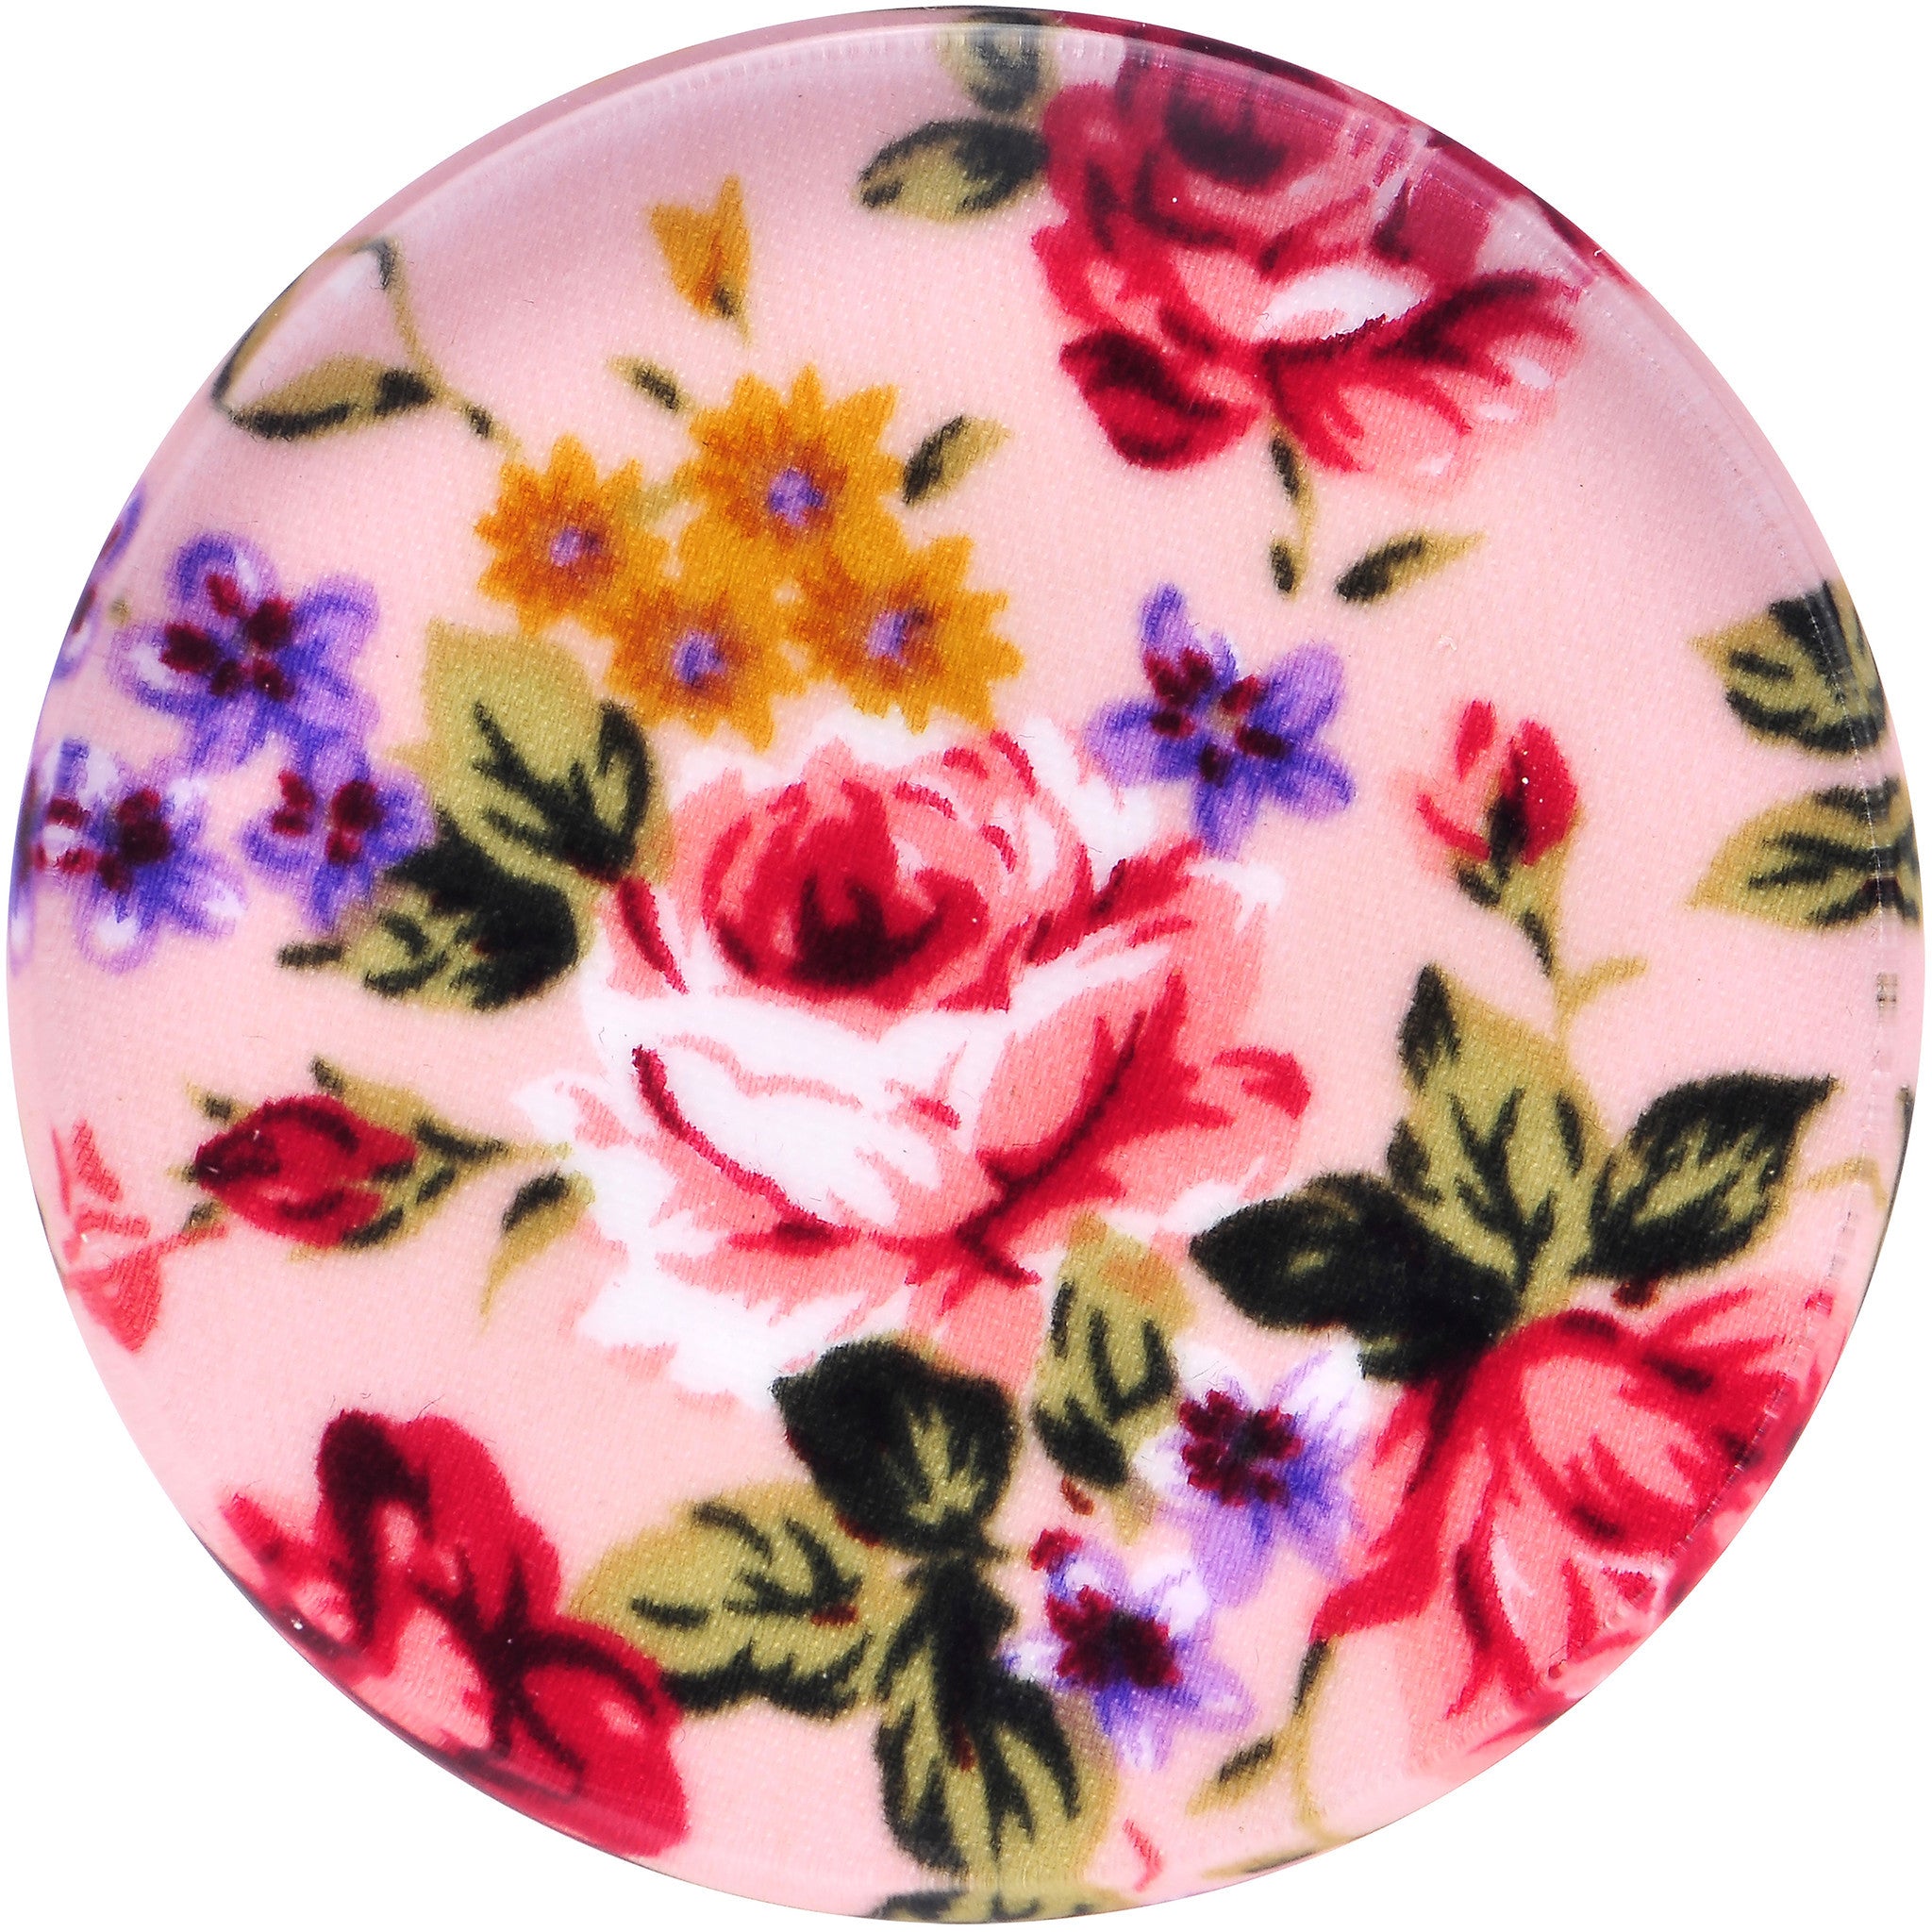 40mm Acrylic Pink Grandma's Wallpaper Flowered Saddle Plug